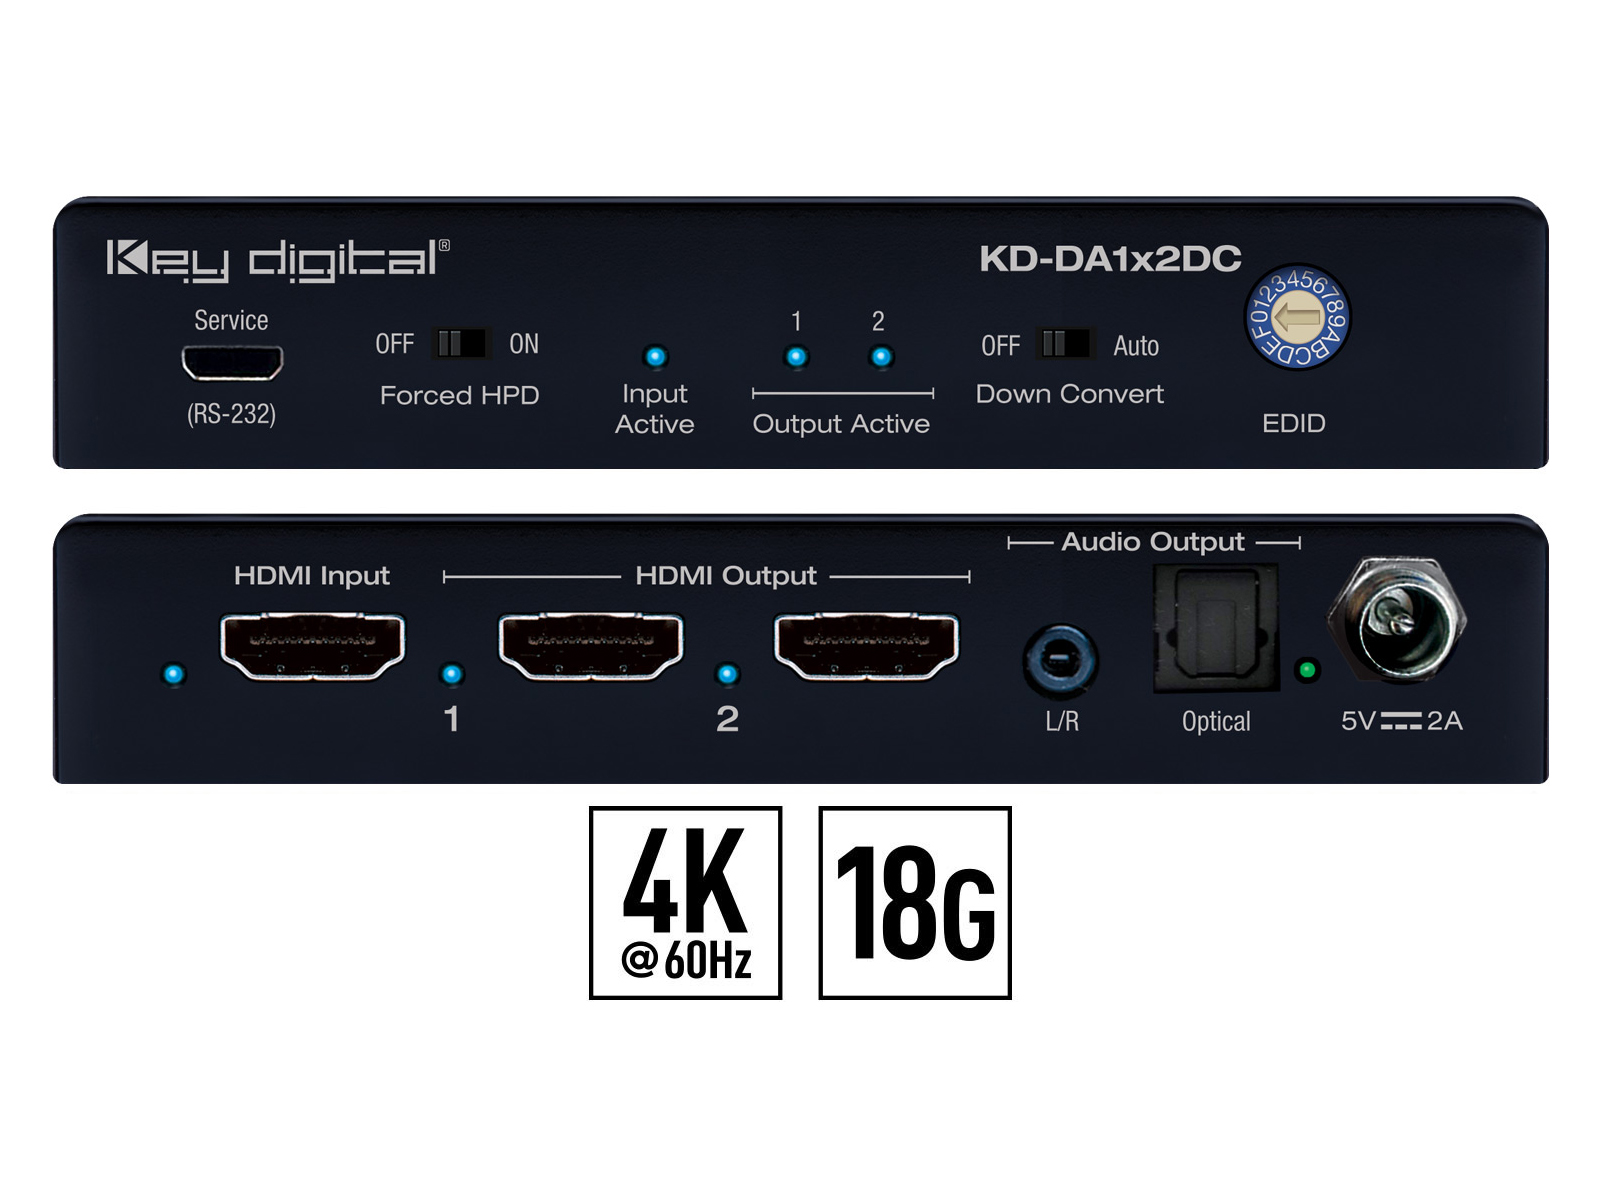 KD-DA1X2DC 4K 18G HDMI Distribution Amplifier with Audio De-Embed 4K to 1080p Down-Convert by Key Digital